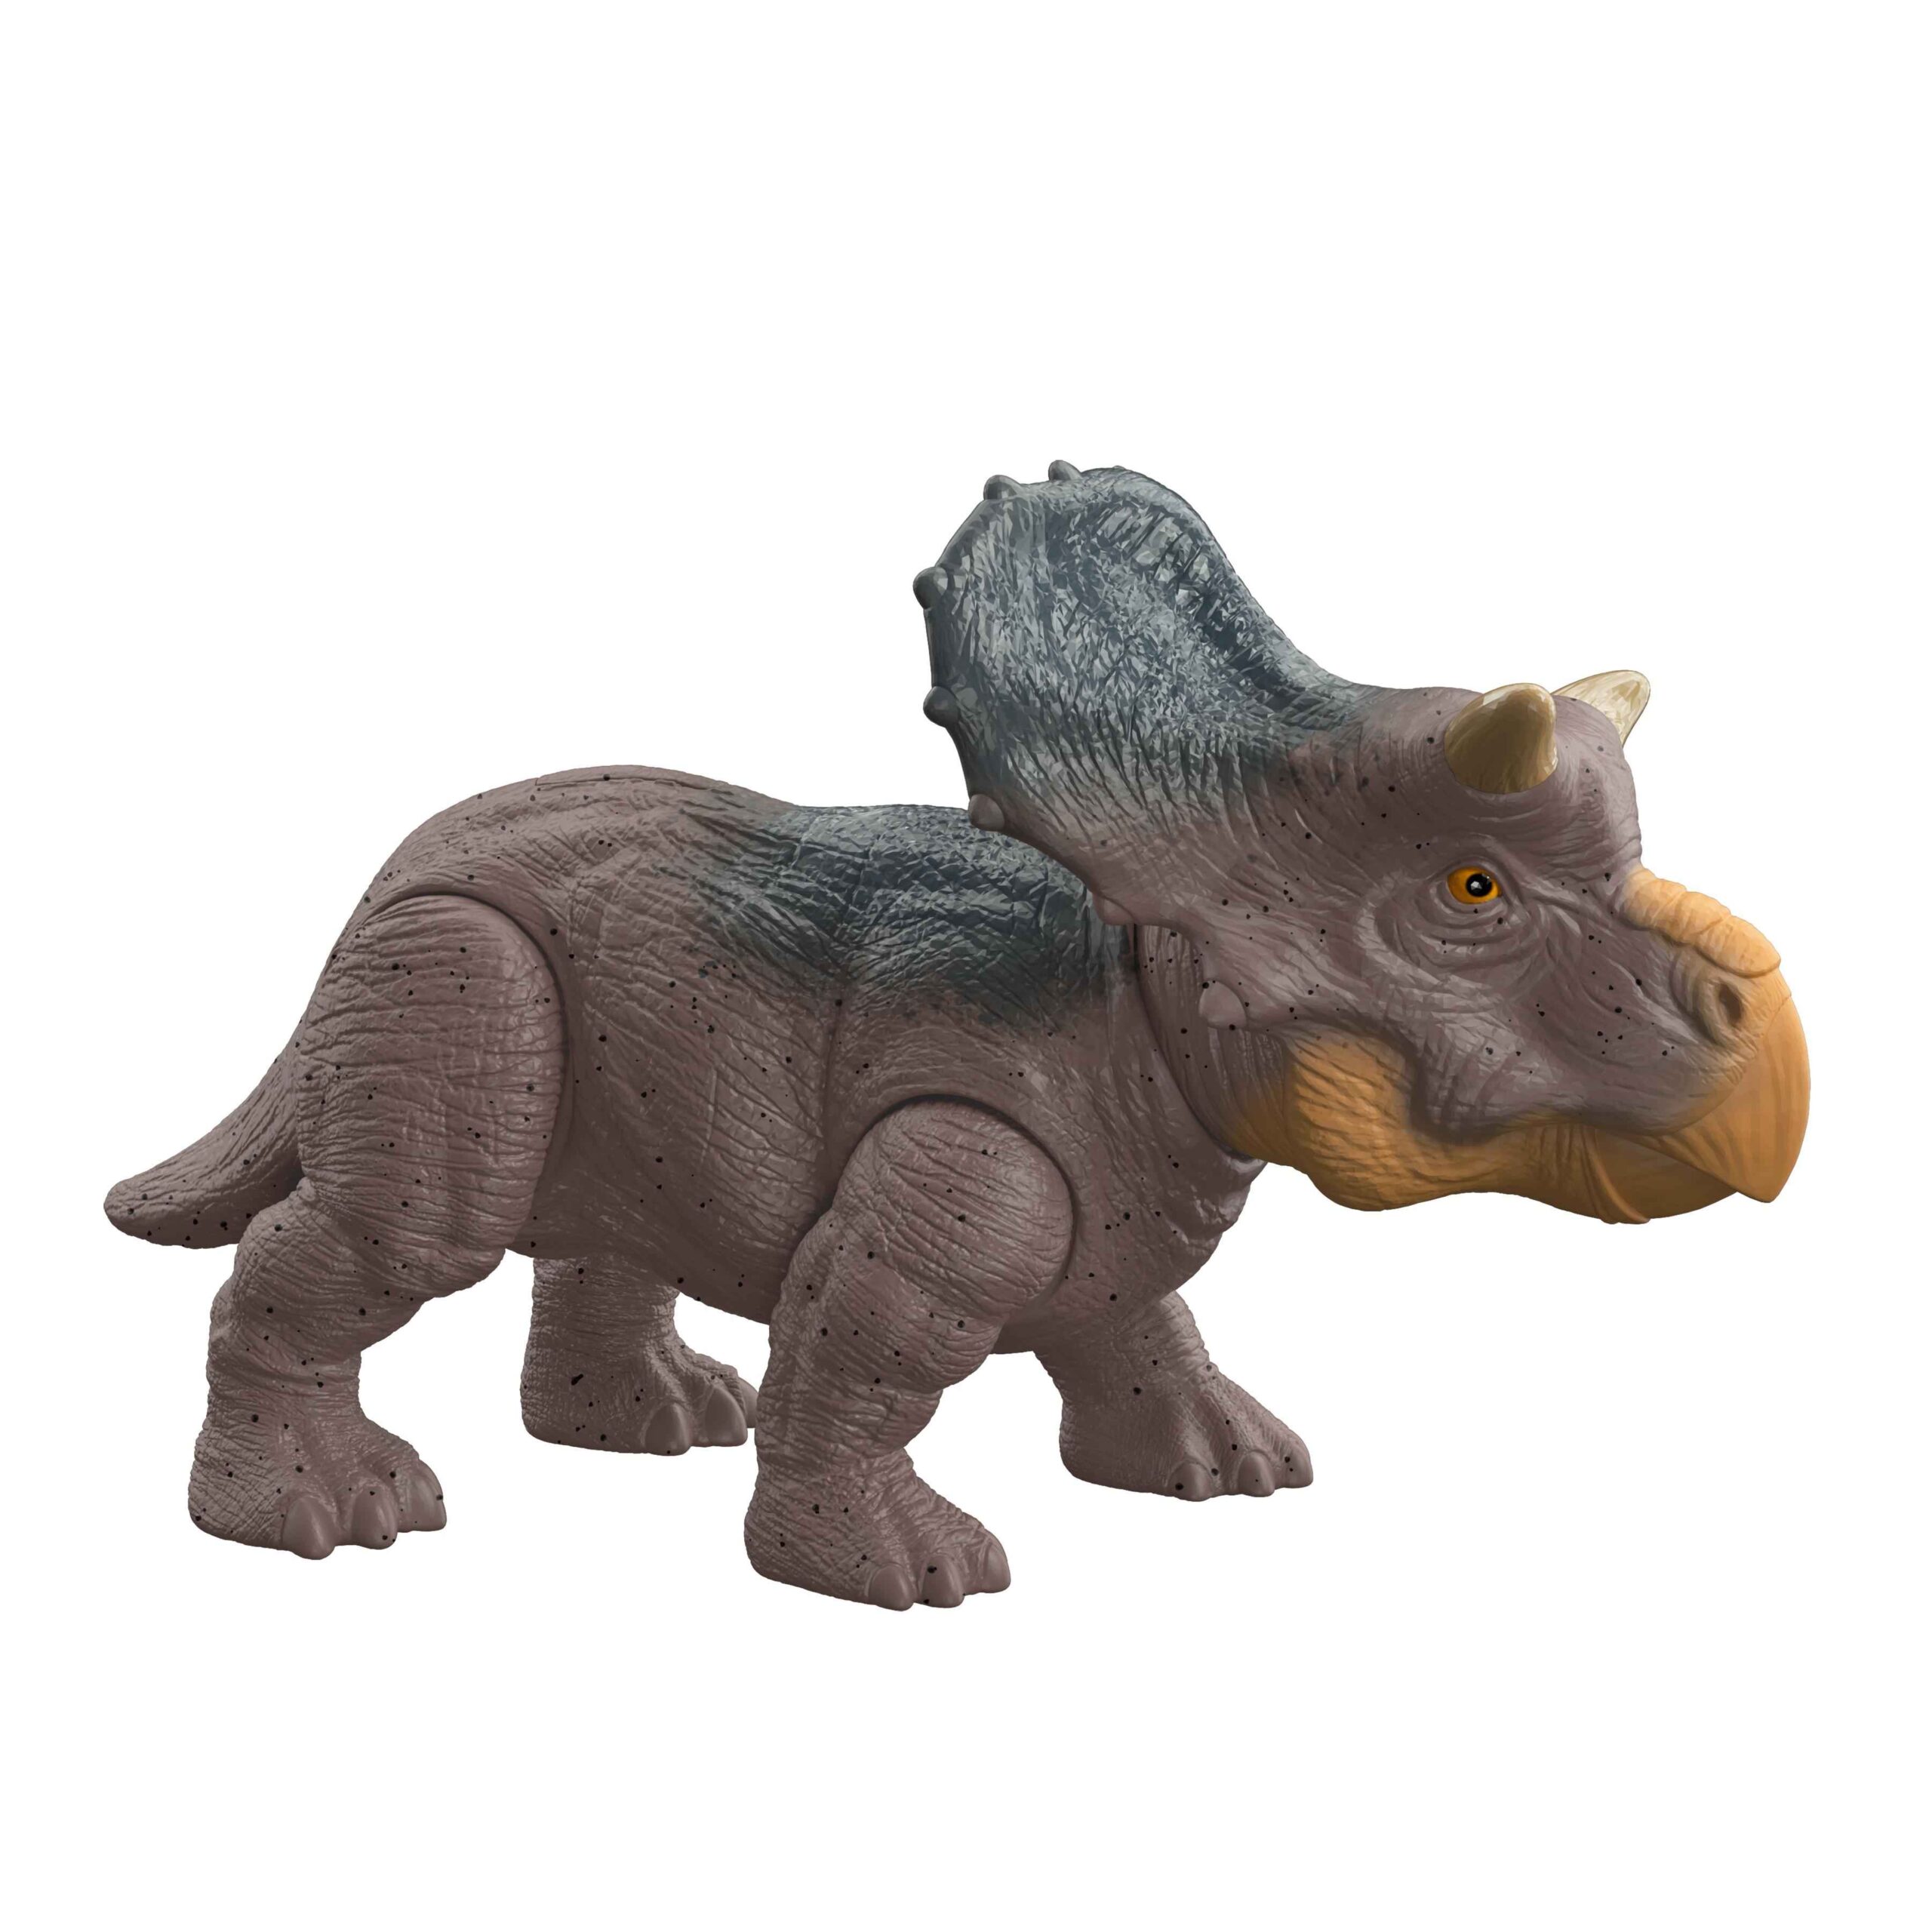 Jurassic World Νέες Βασικές Φιγούρες Δεινοσαύρων 12 Σχέδια HDX18 - Jurassic World